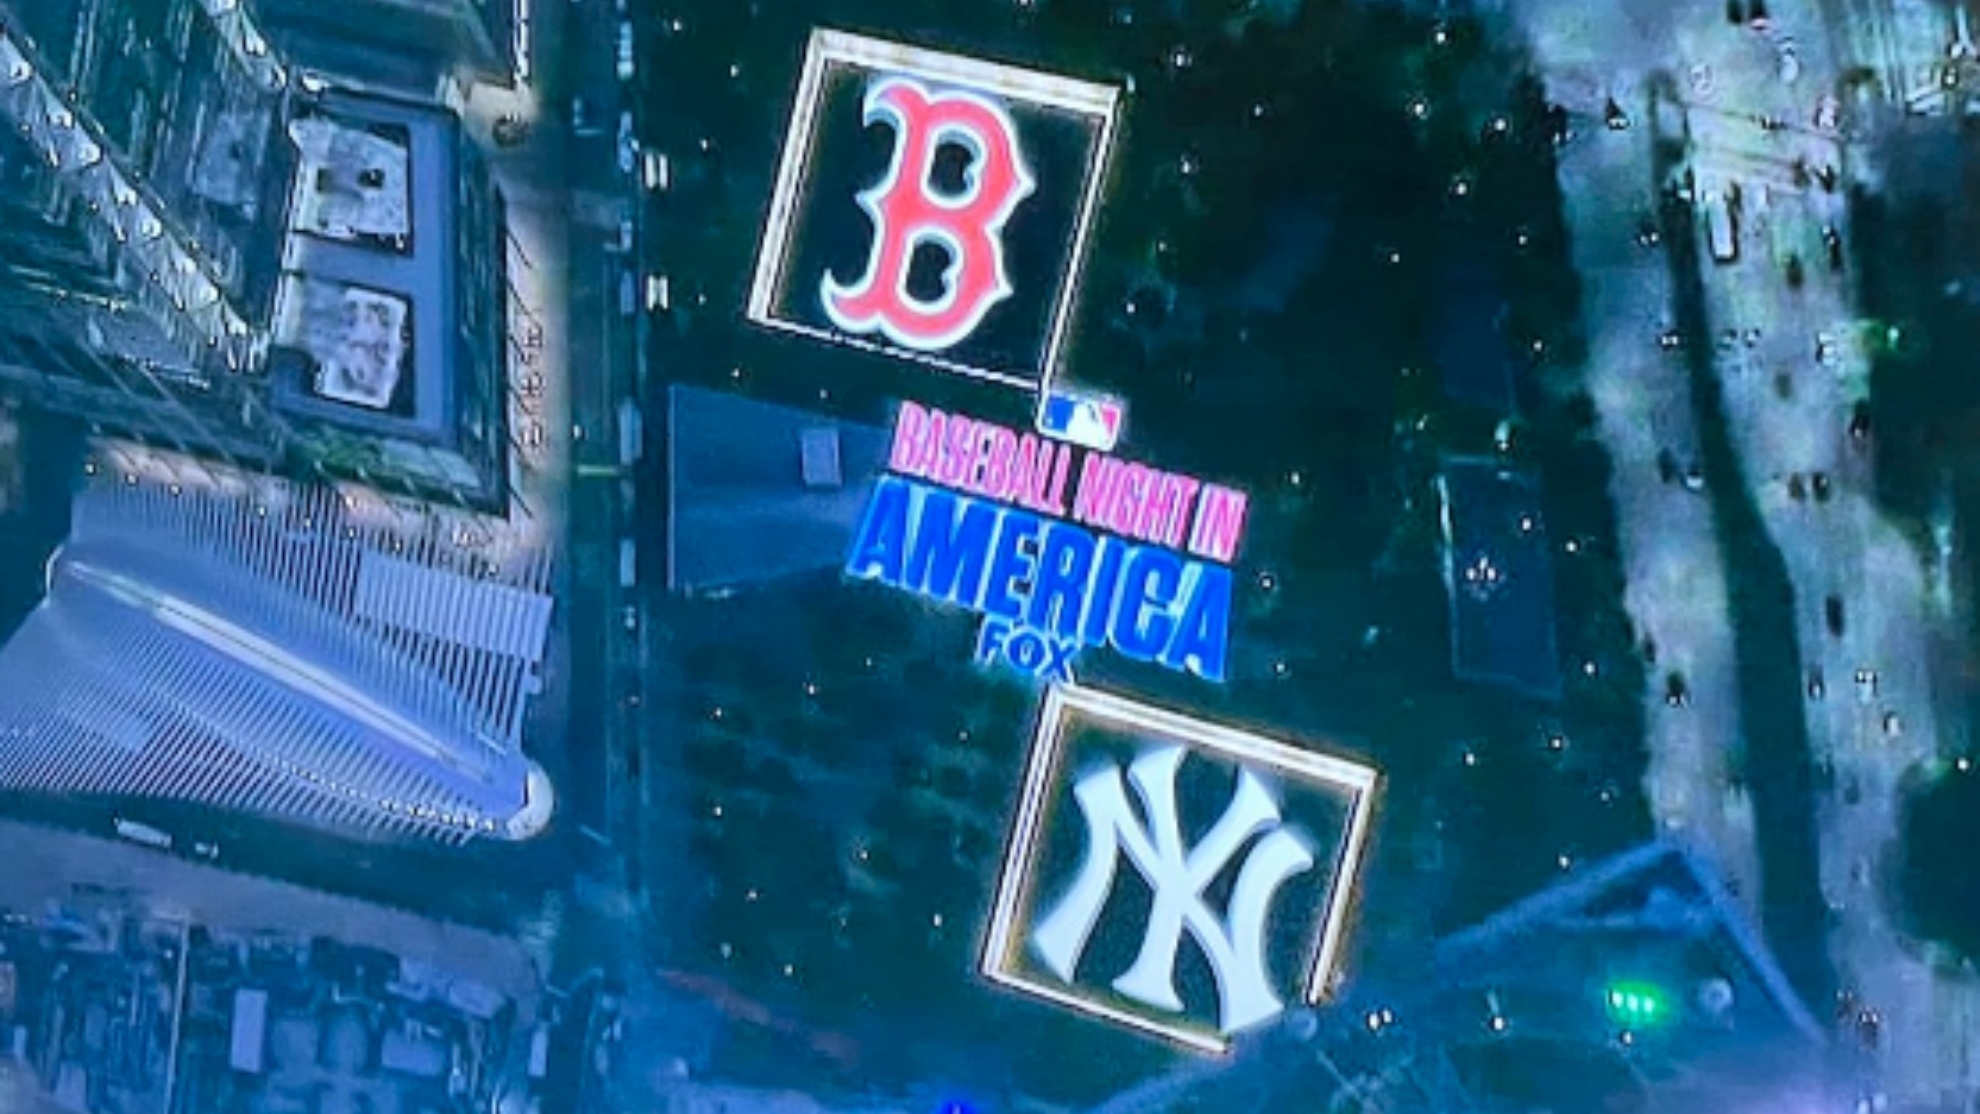 Boston Red Sox vs New York Yankees promo